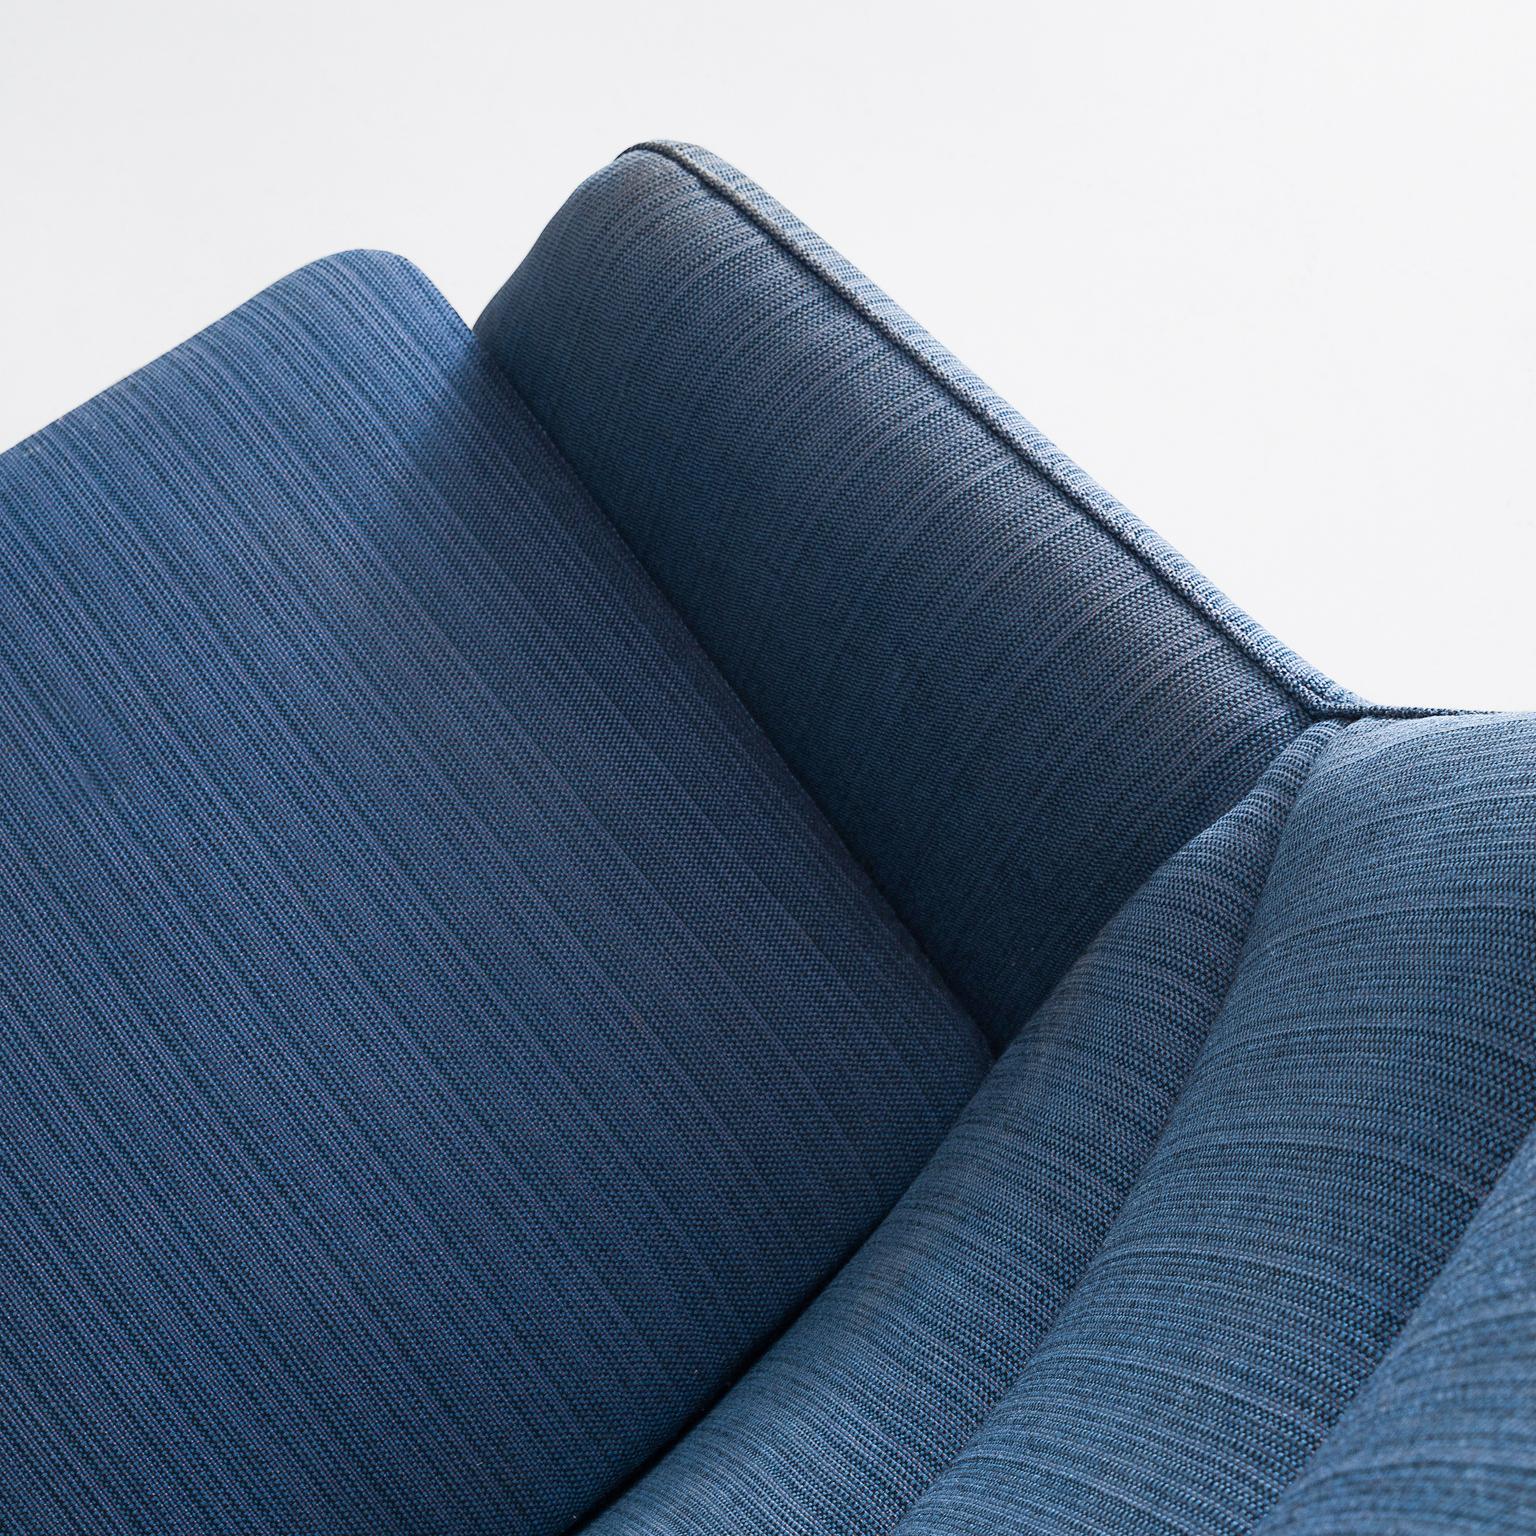 Illum Wikkelsø Lounge Chair in Blue Upholstery For Sale 1